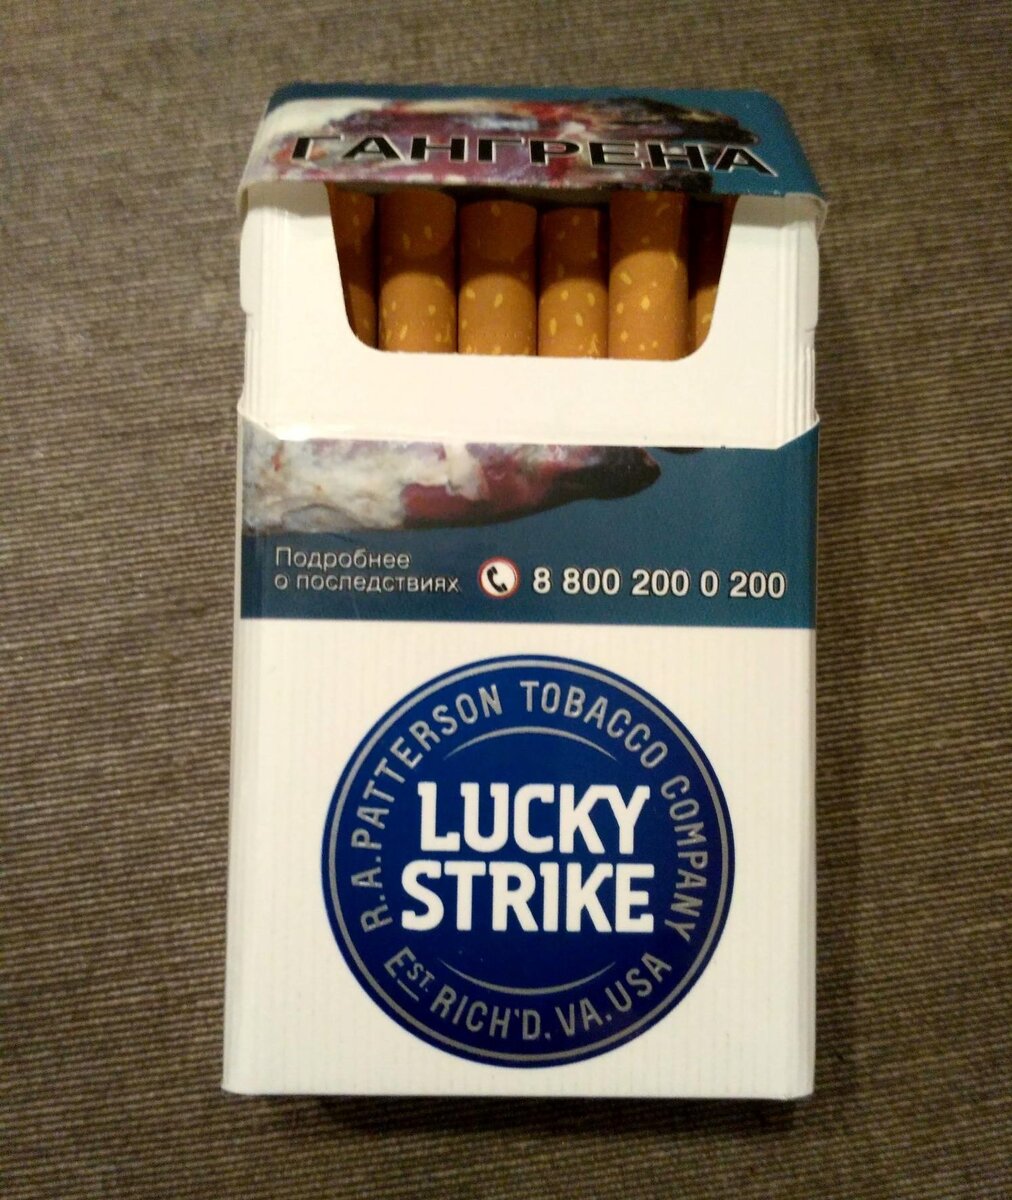 Лайки страйк компакт. Сигареты лайки Strike компакт Блю. Сигареты Lucky Strike Compact Blue. Лаки страйк премиум Блю. Сигареты лайки страйк премиум Блю.